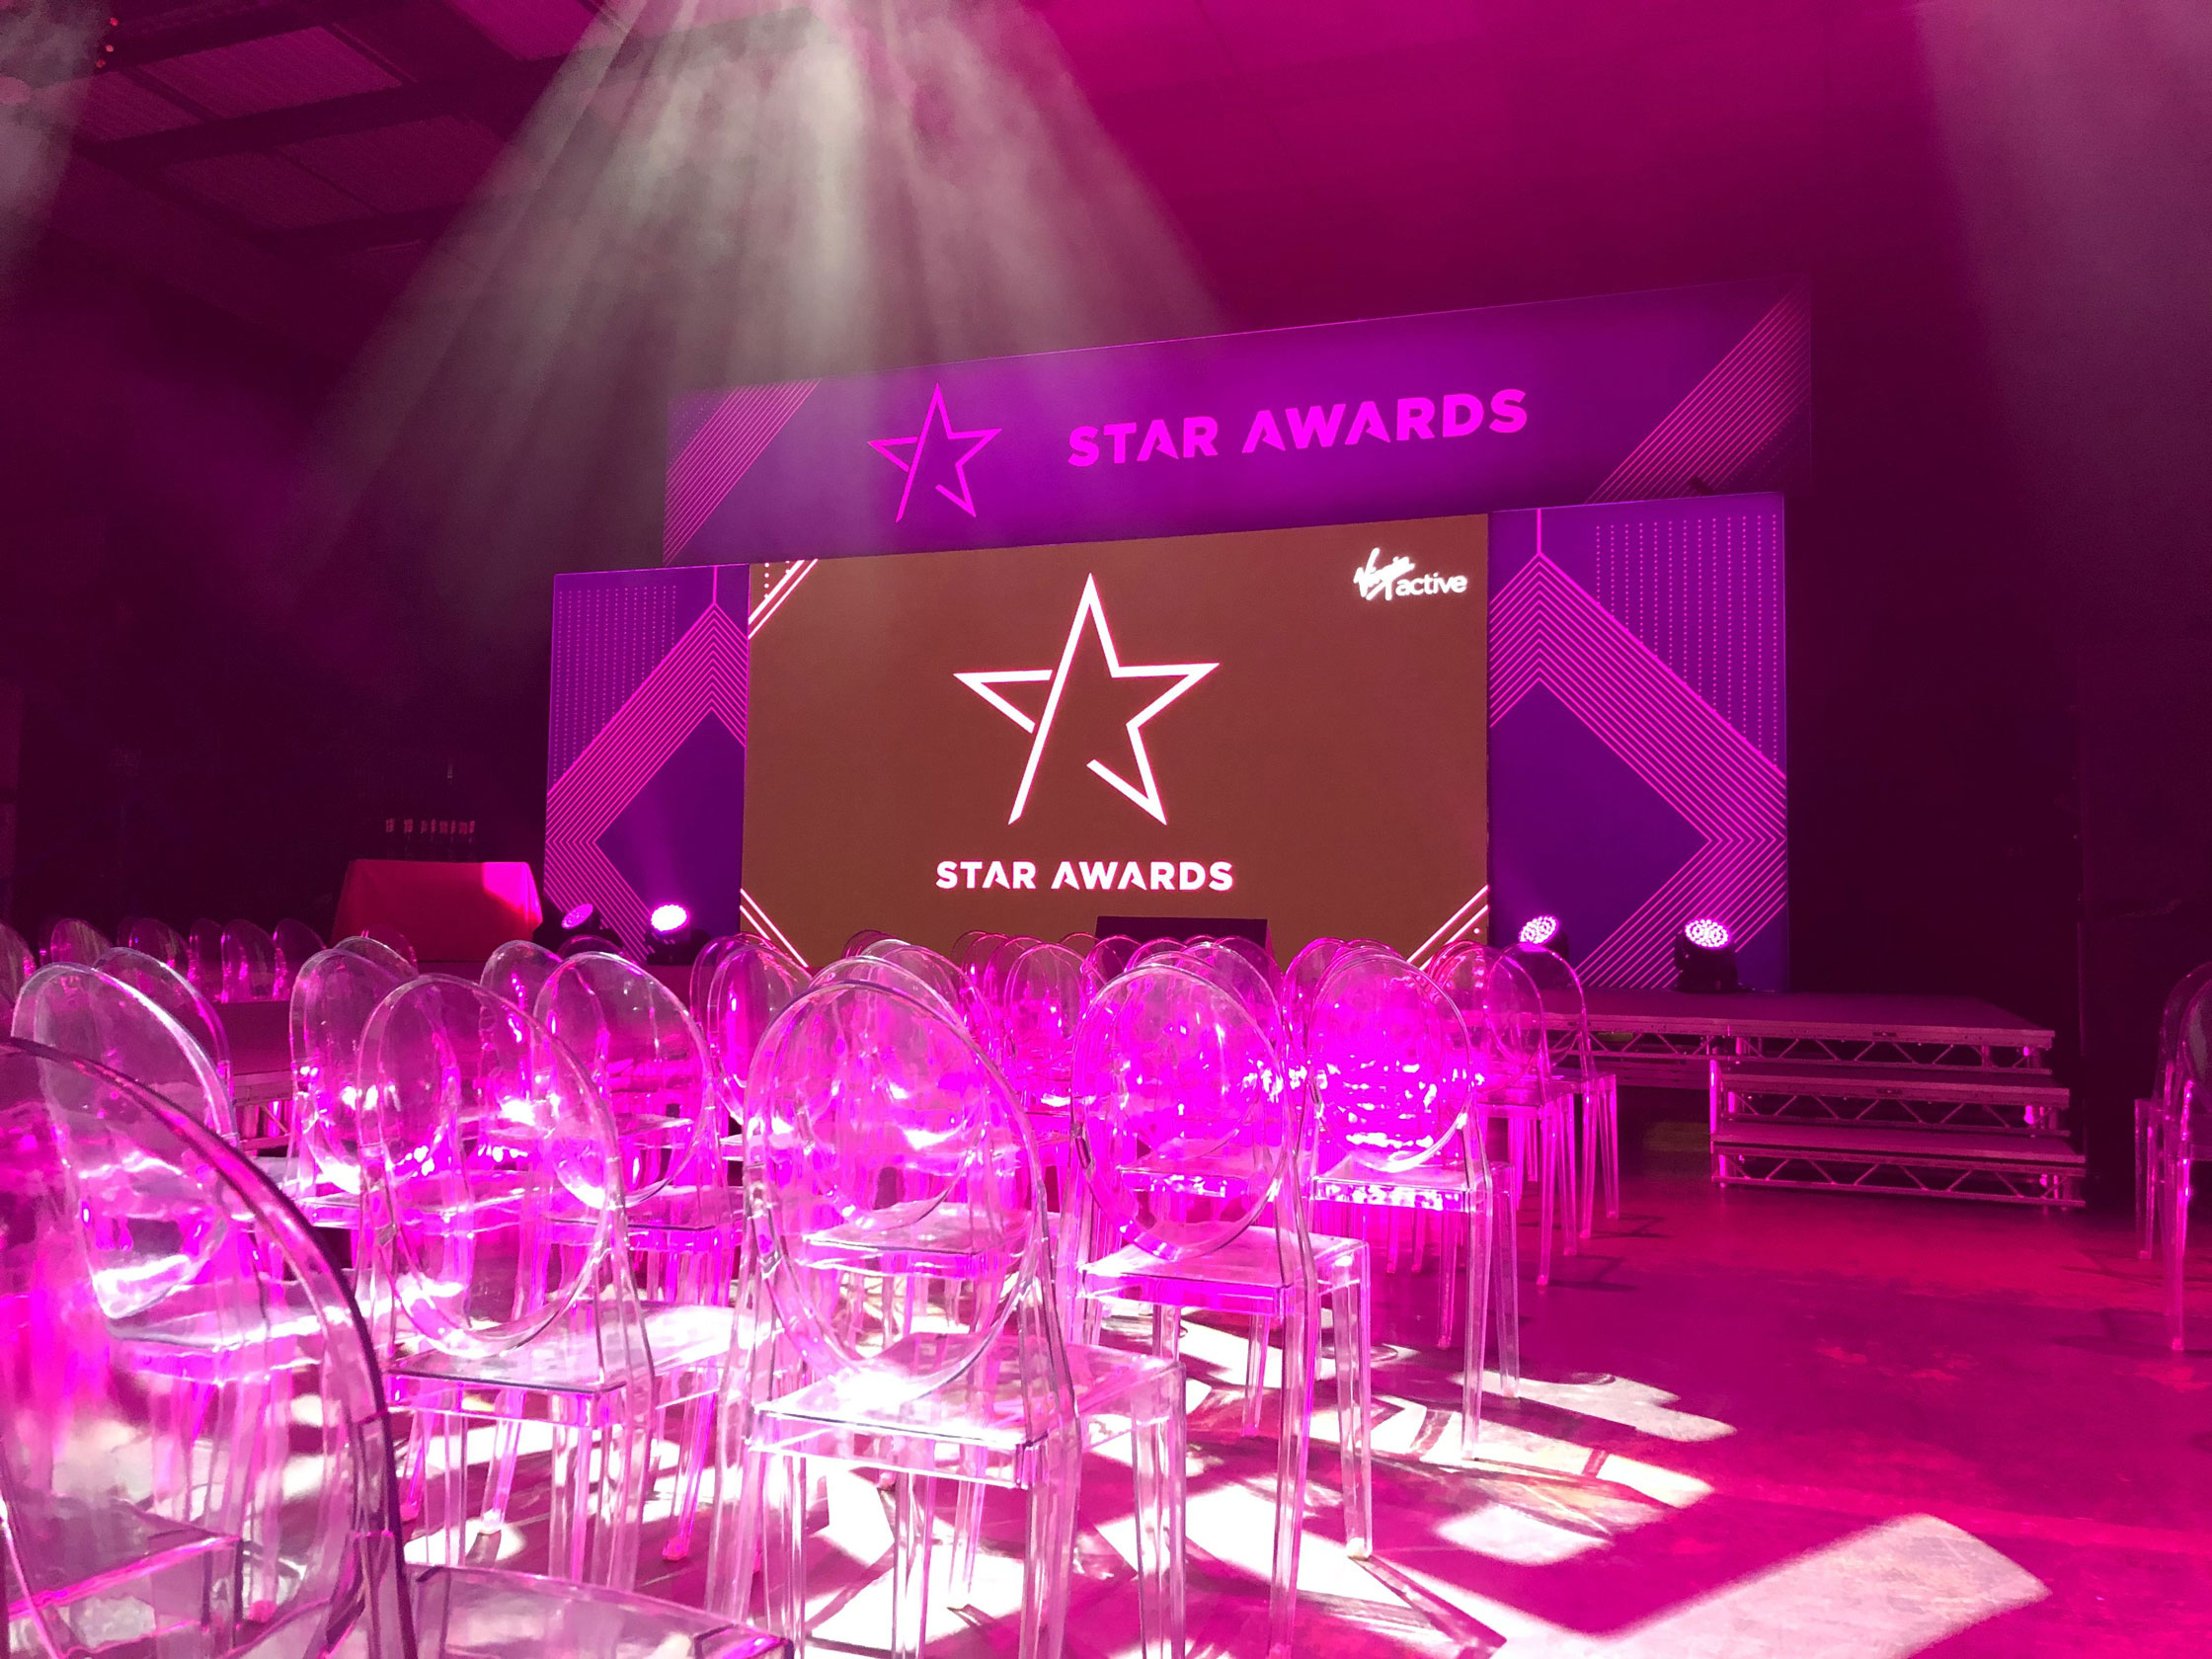 OneBigStar Virgin Active Star Awards Awards Ceremony & Party